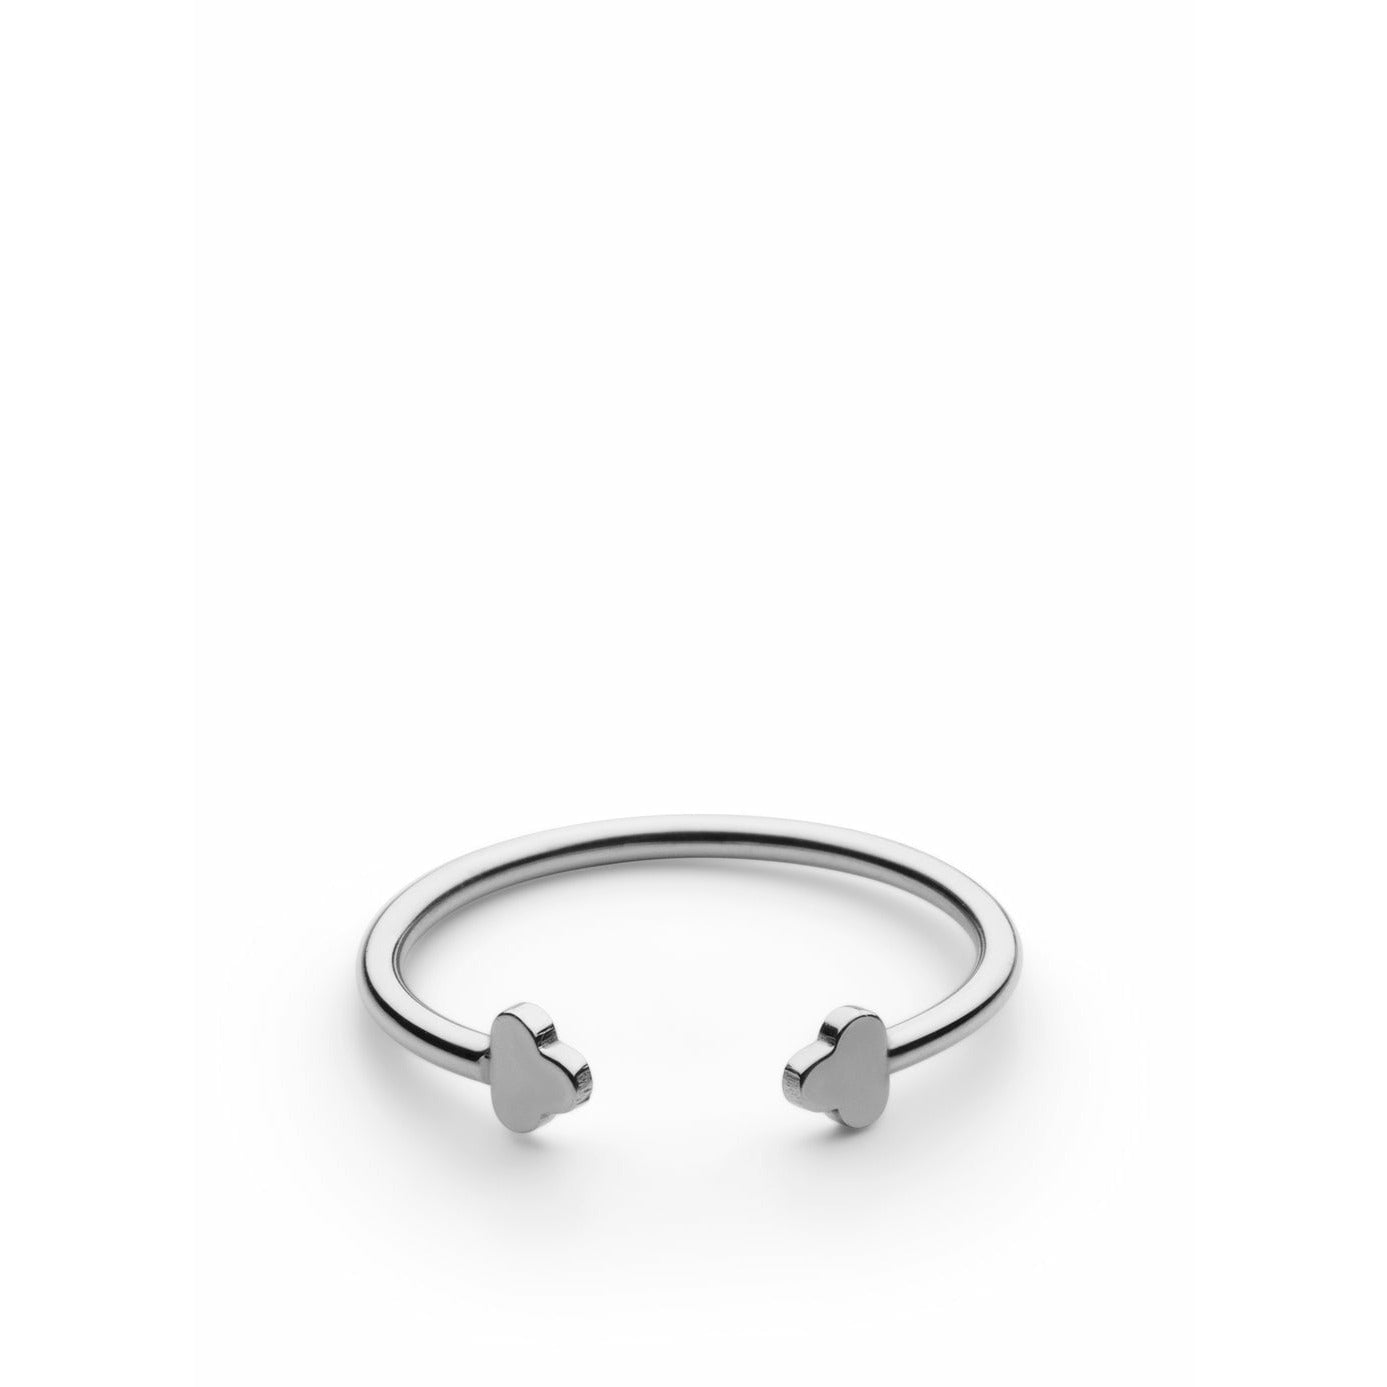 Skultuna Open Key Ring Acero pulido mediano, Ø1,73 cm